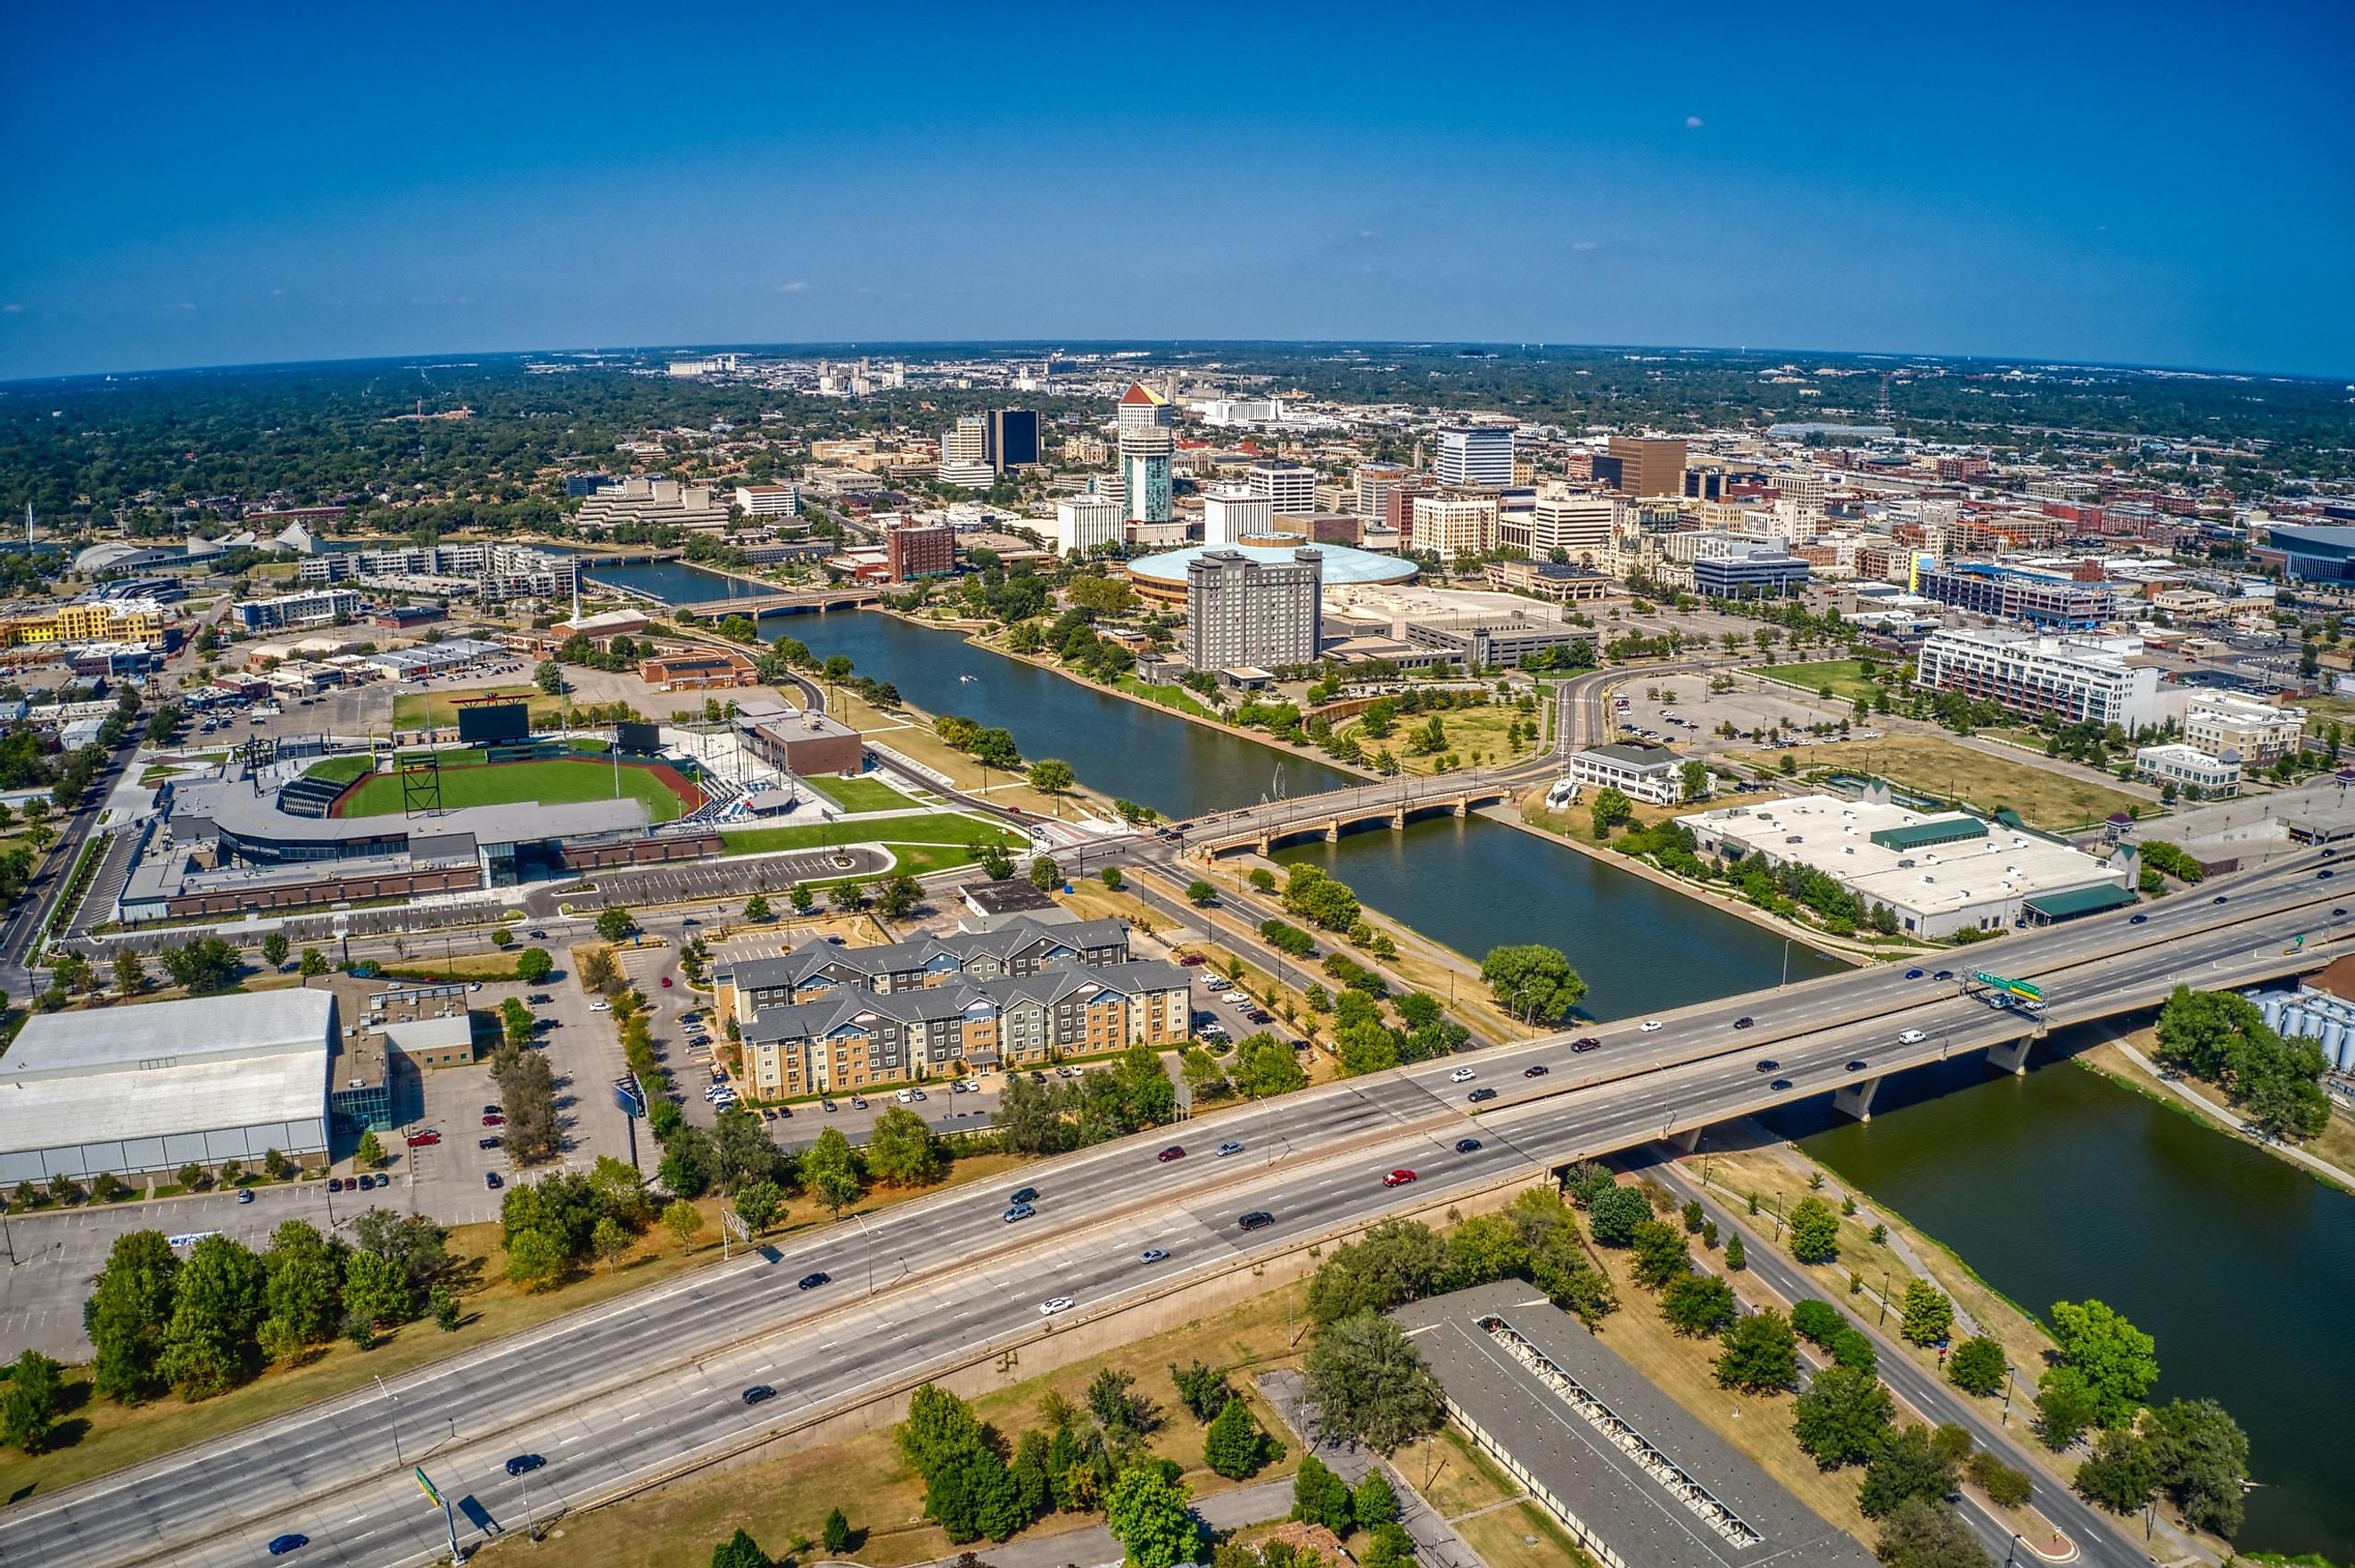 Aerial view of Wichita, Kansas.